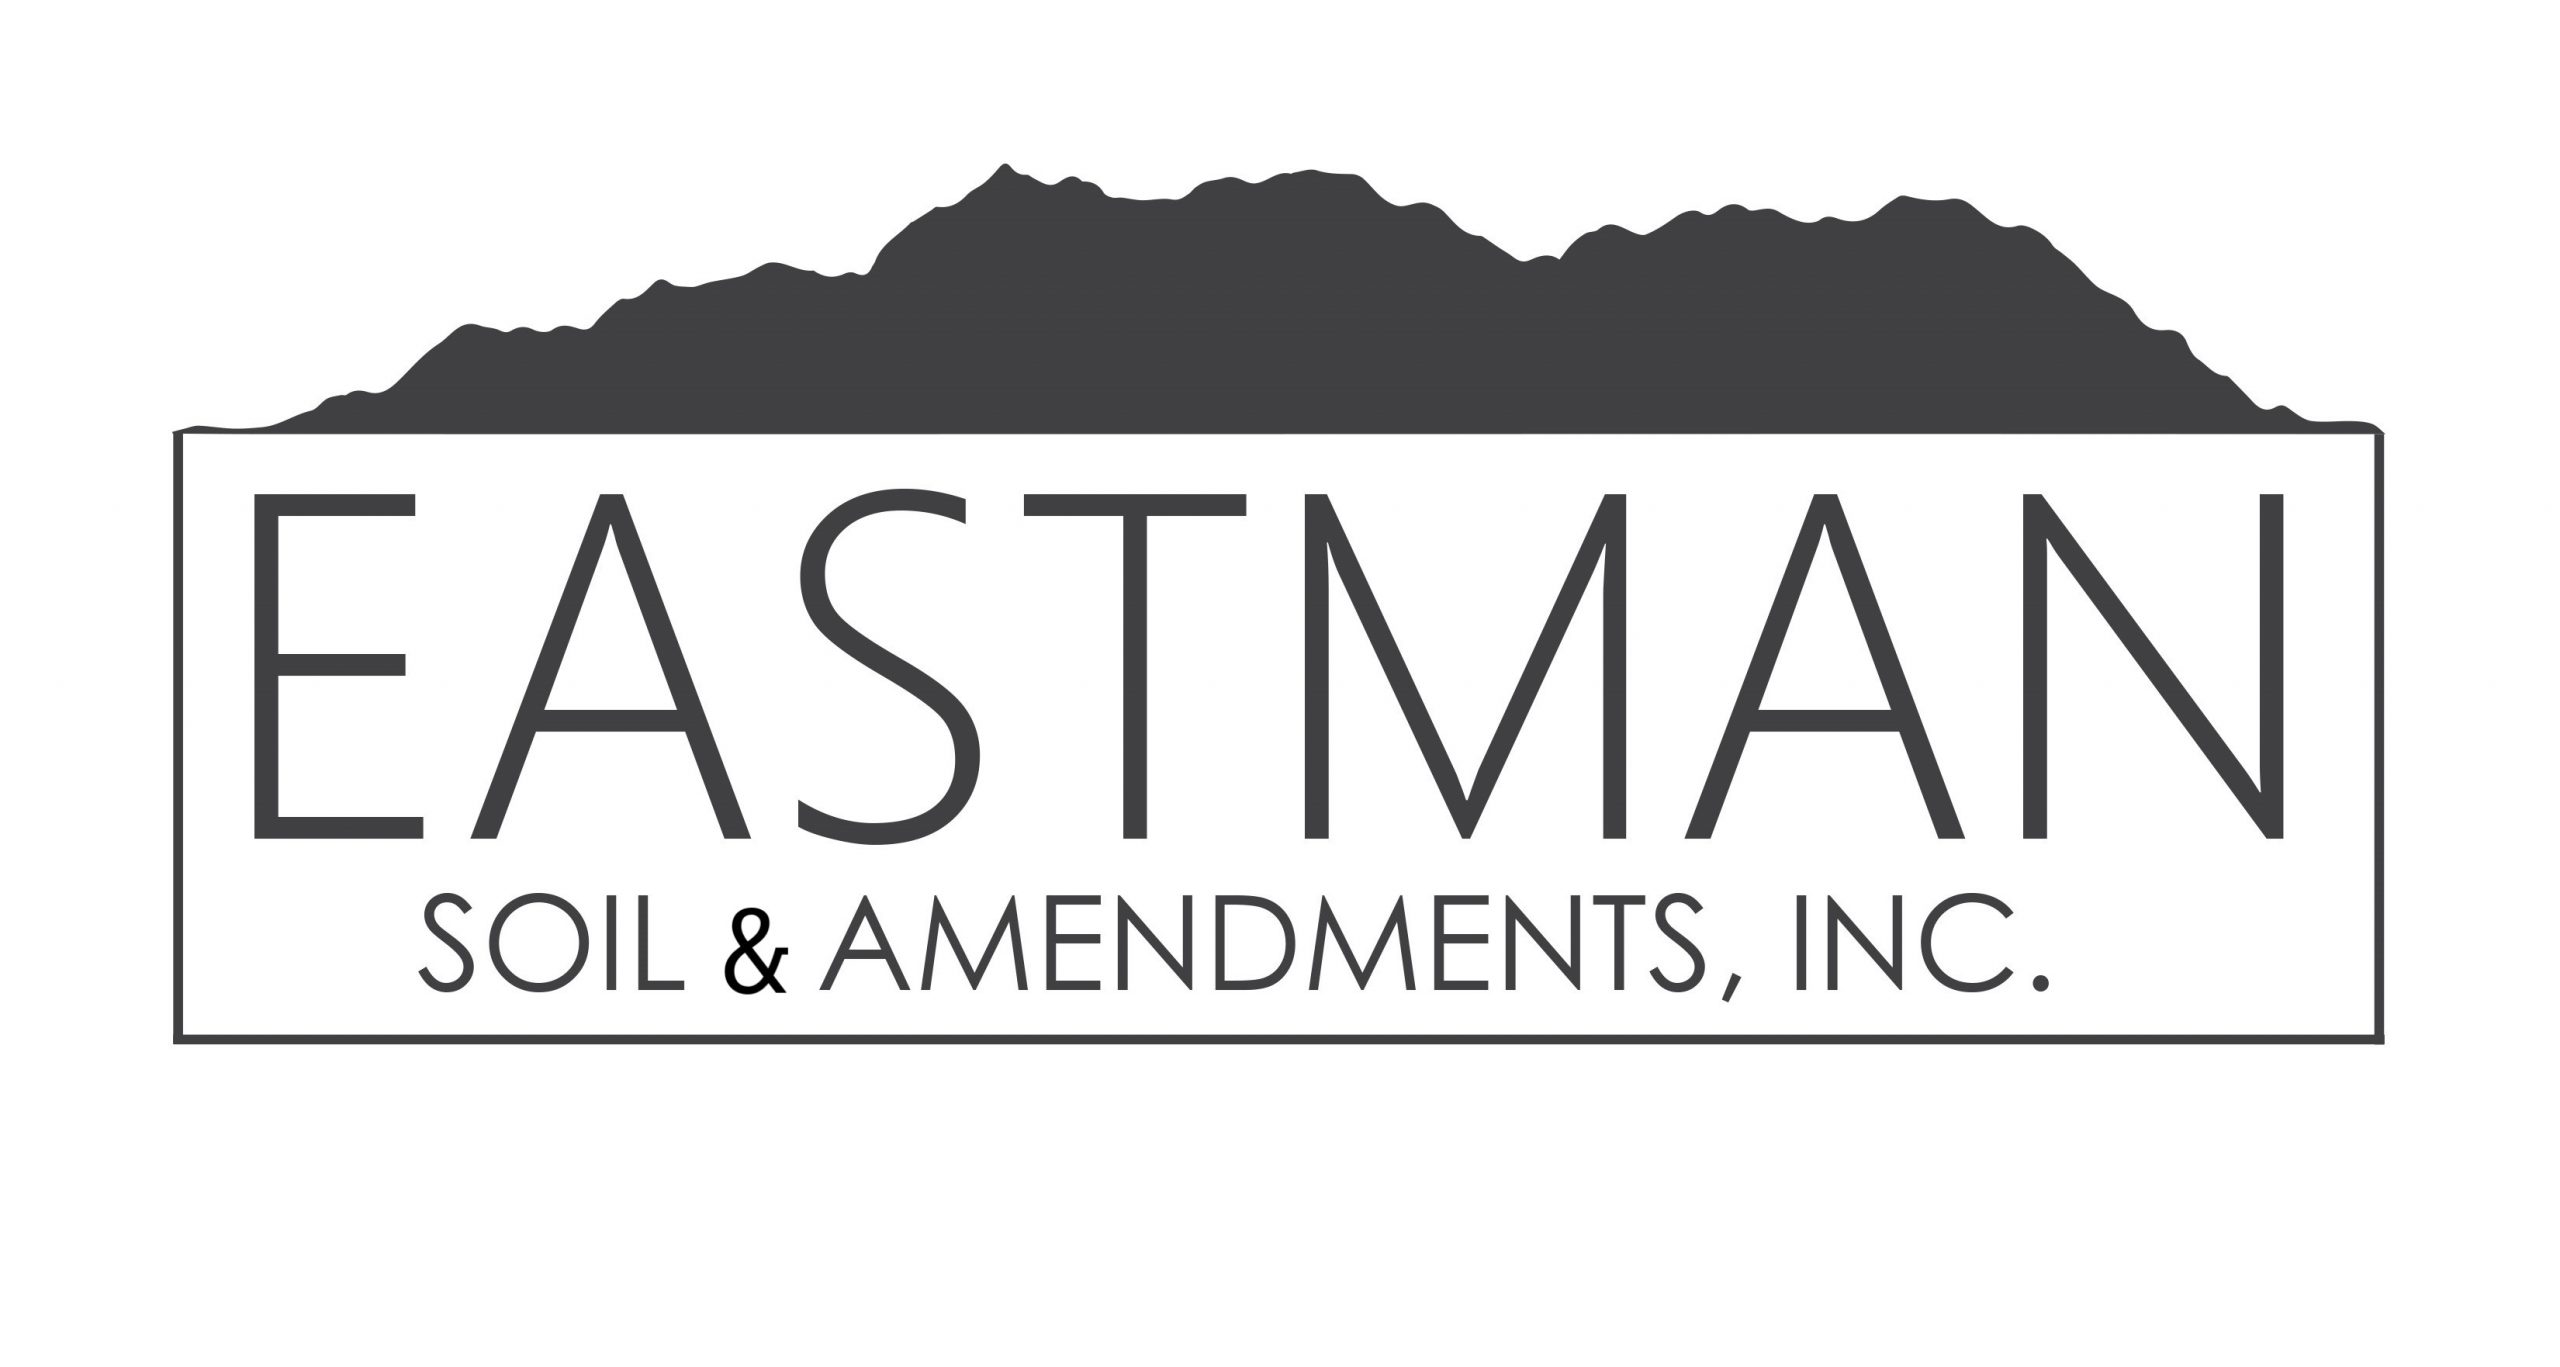 Eastman Soil Amendments, Inc.